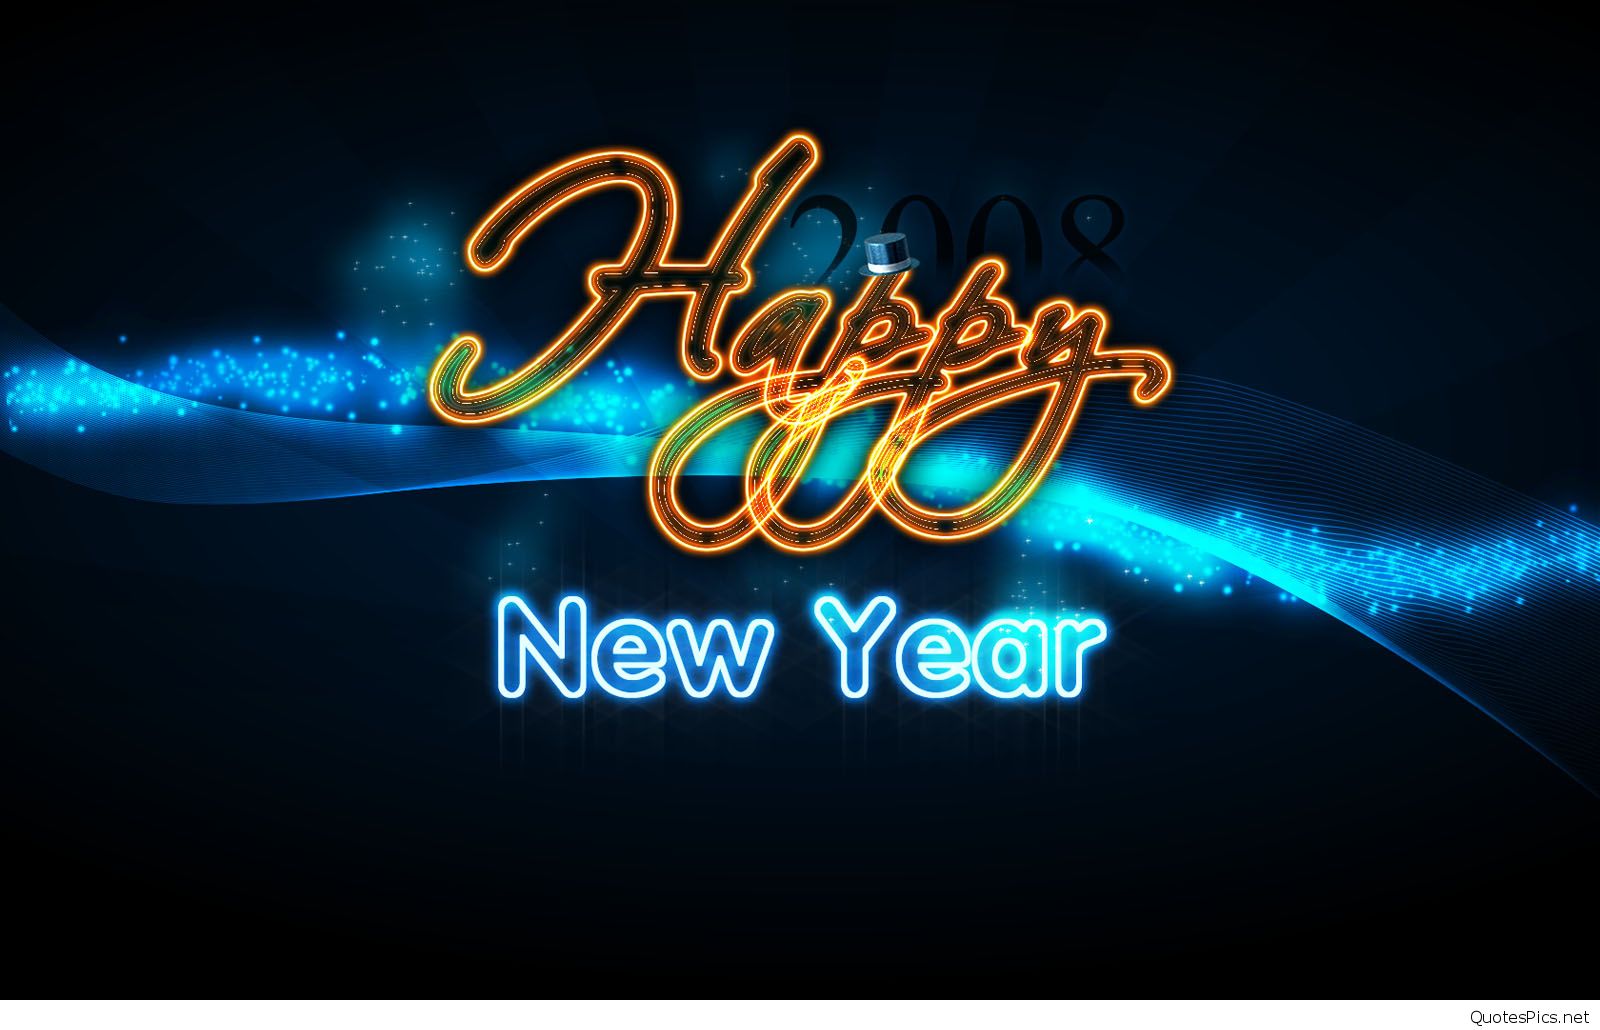 Happy New Year HD Wallpaper Image